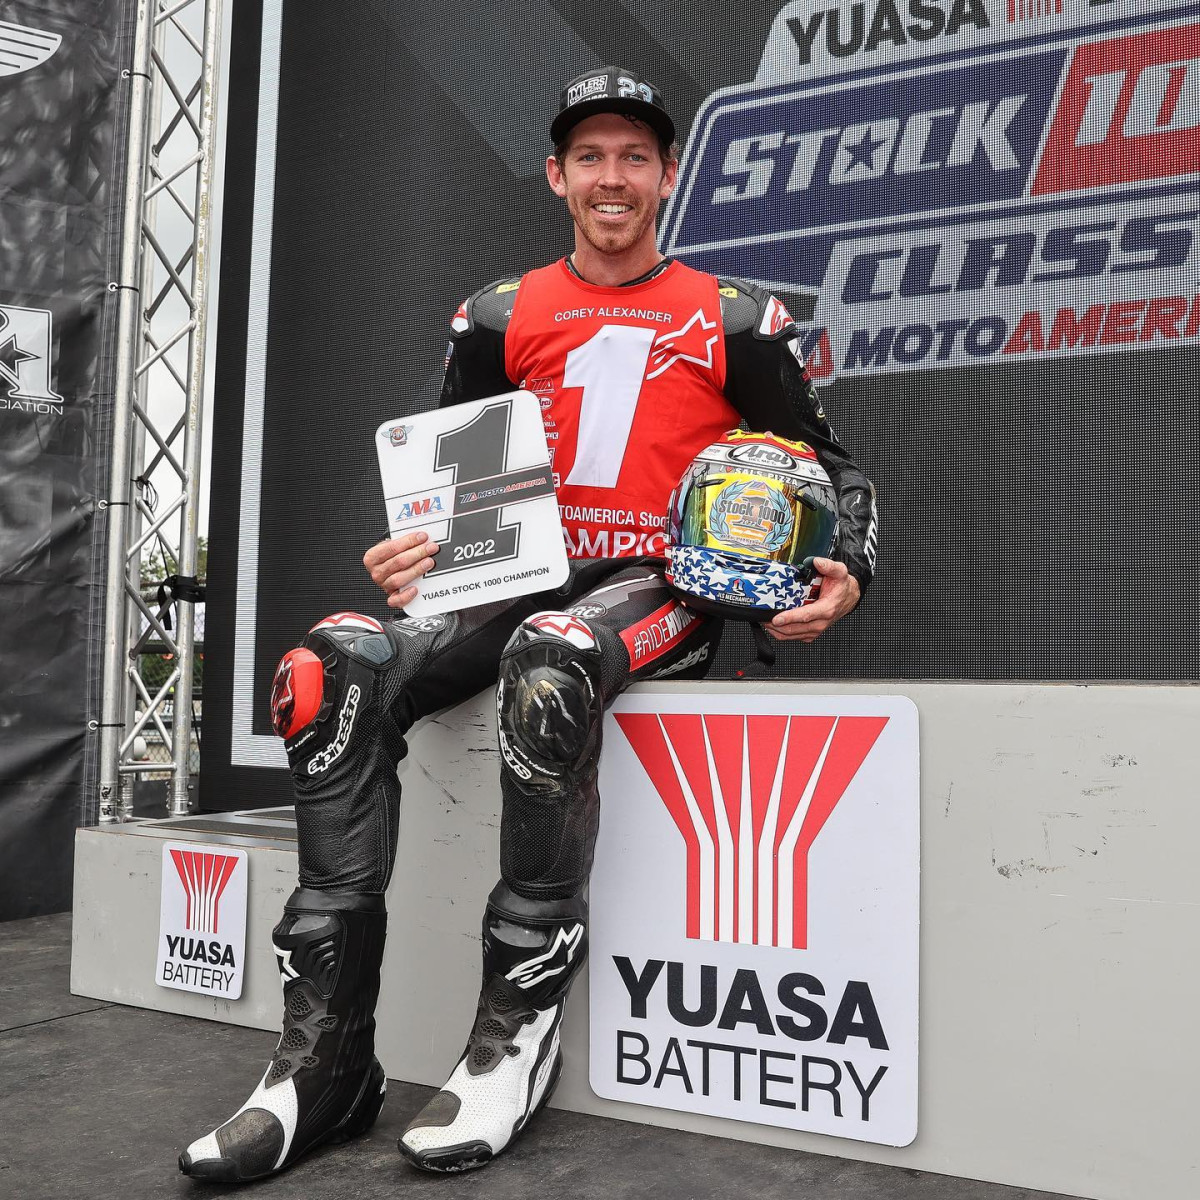 MotoAmerica Yuasa Battery Stock 1000 Champion on podium with trophy plaque